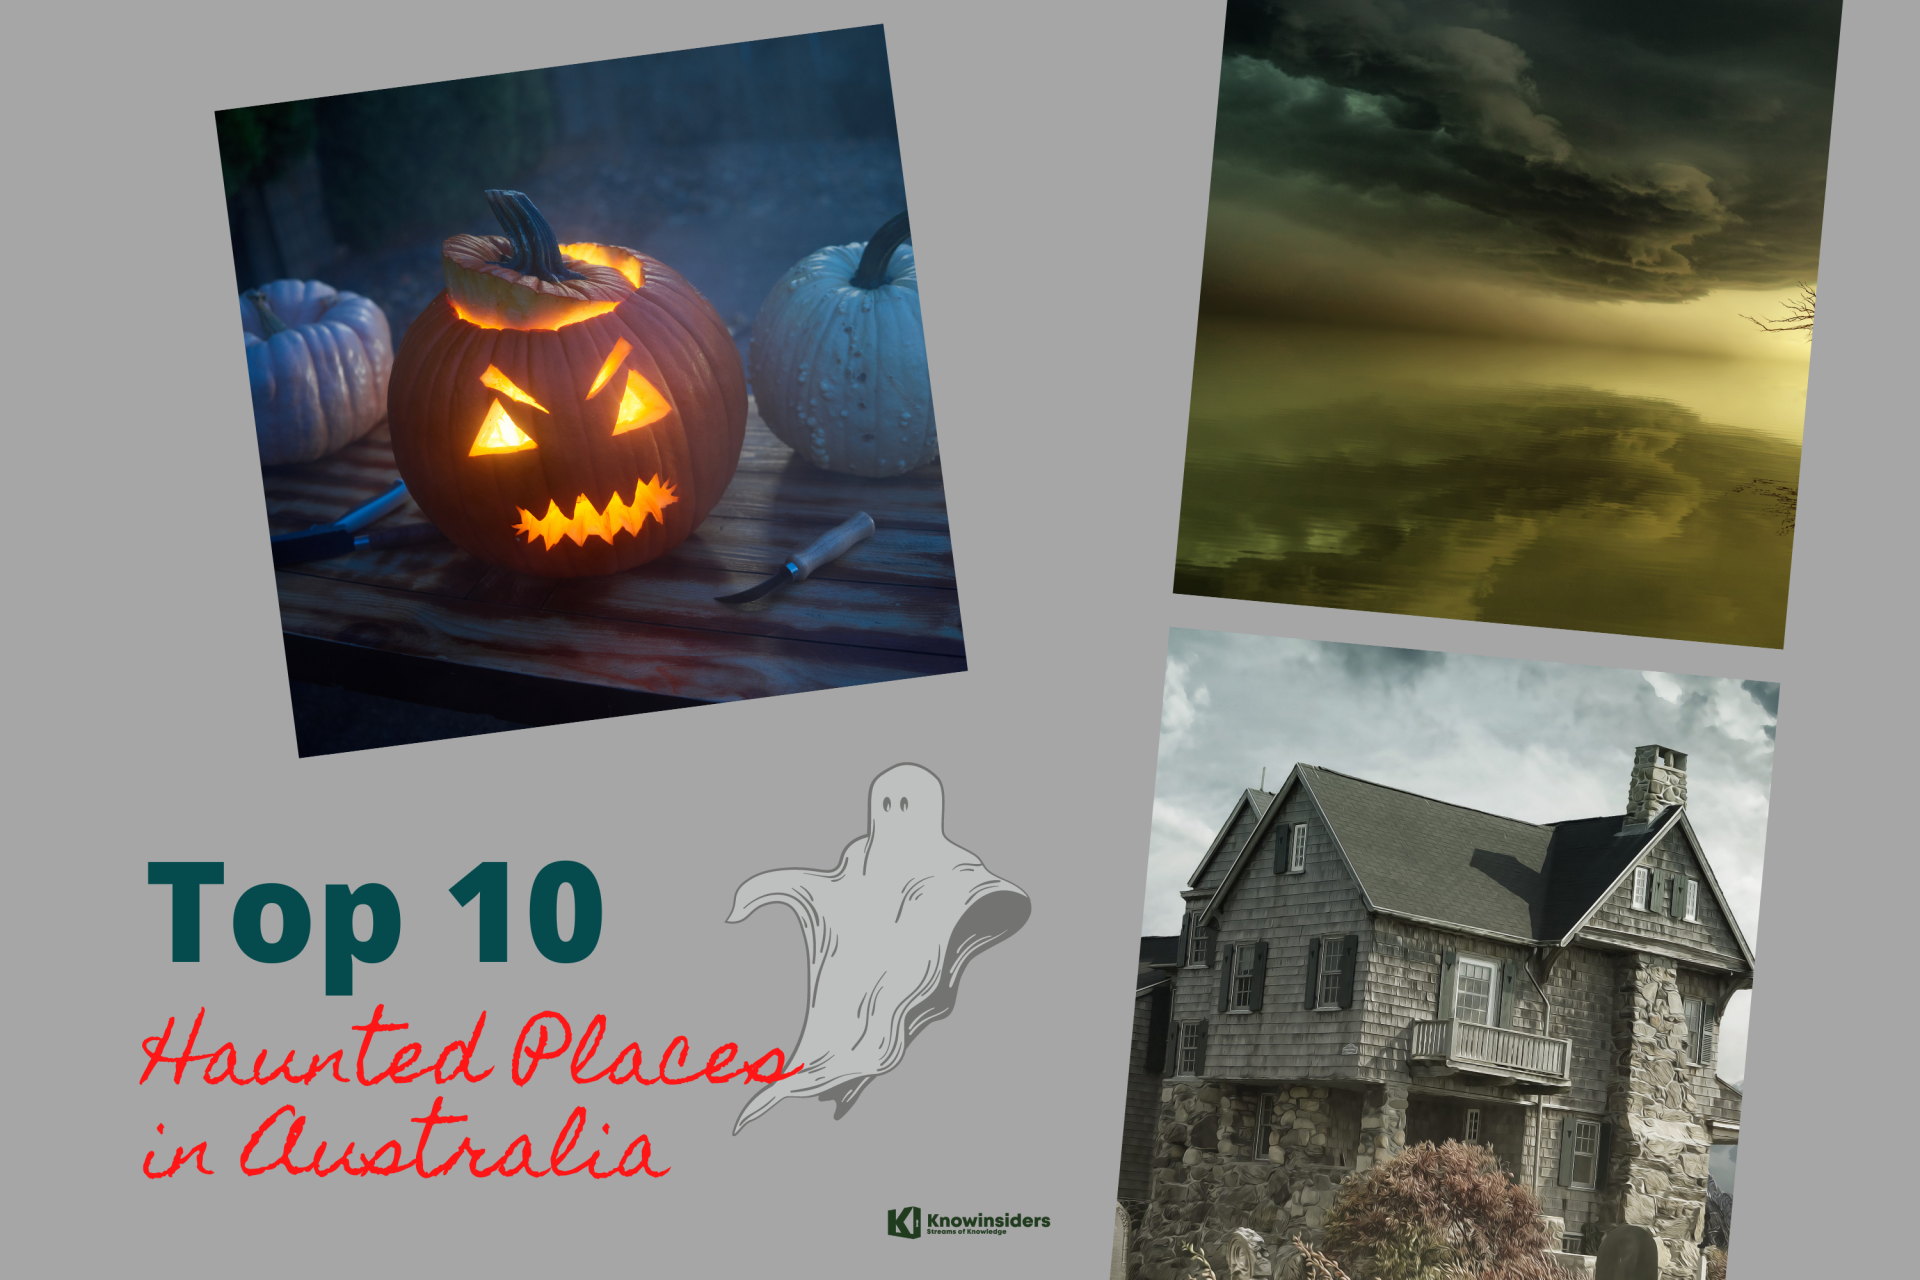 Top 10 Haunted Places in Australia